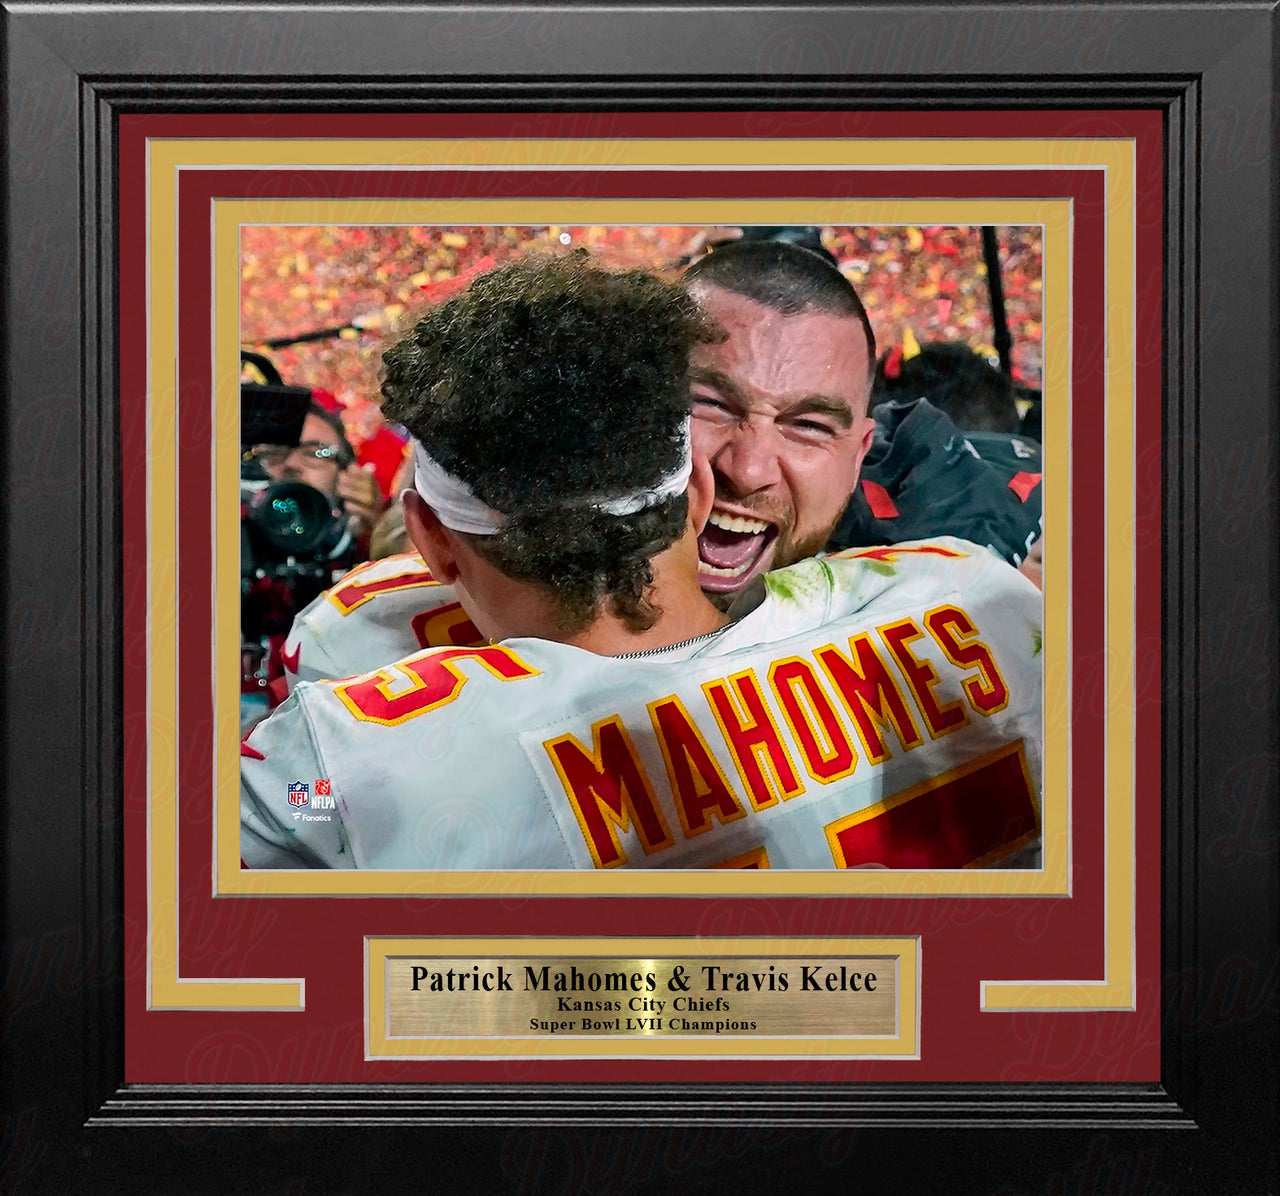 Patrick Mahomes & Travis Kelce Super Bowl LVII Champions Kansas City Chiefs 8x10 Framed Photo - Dynasty Sports & Framing 